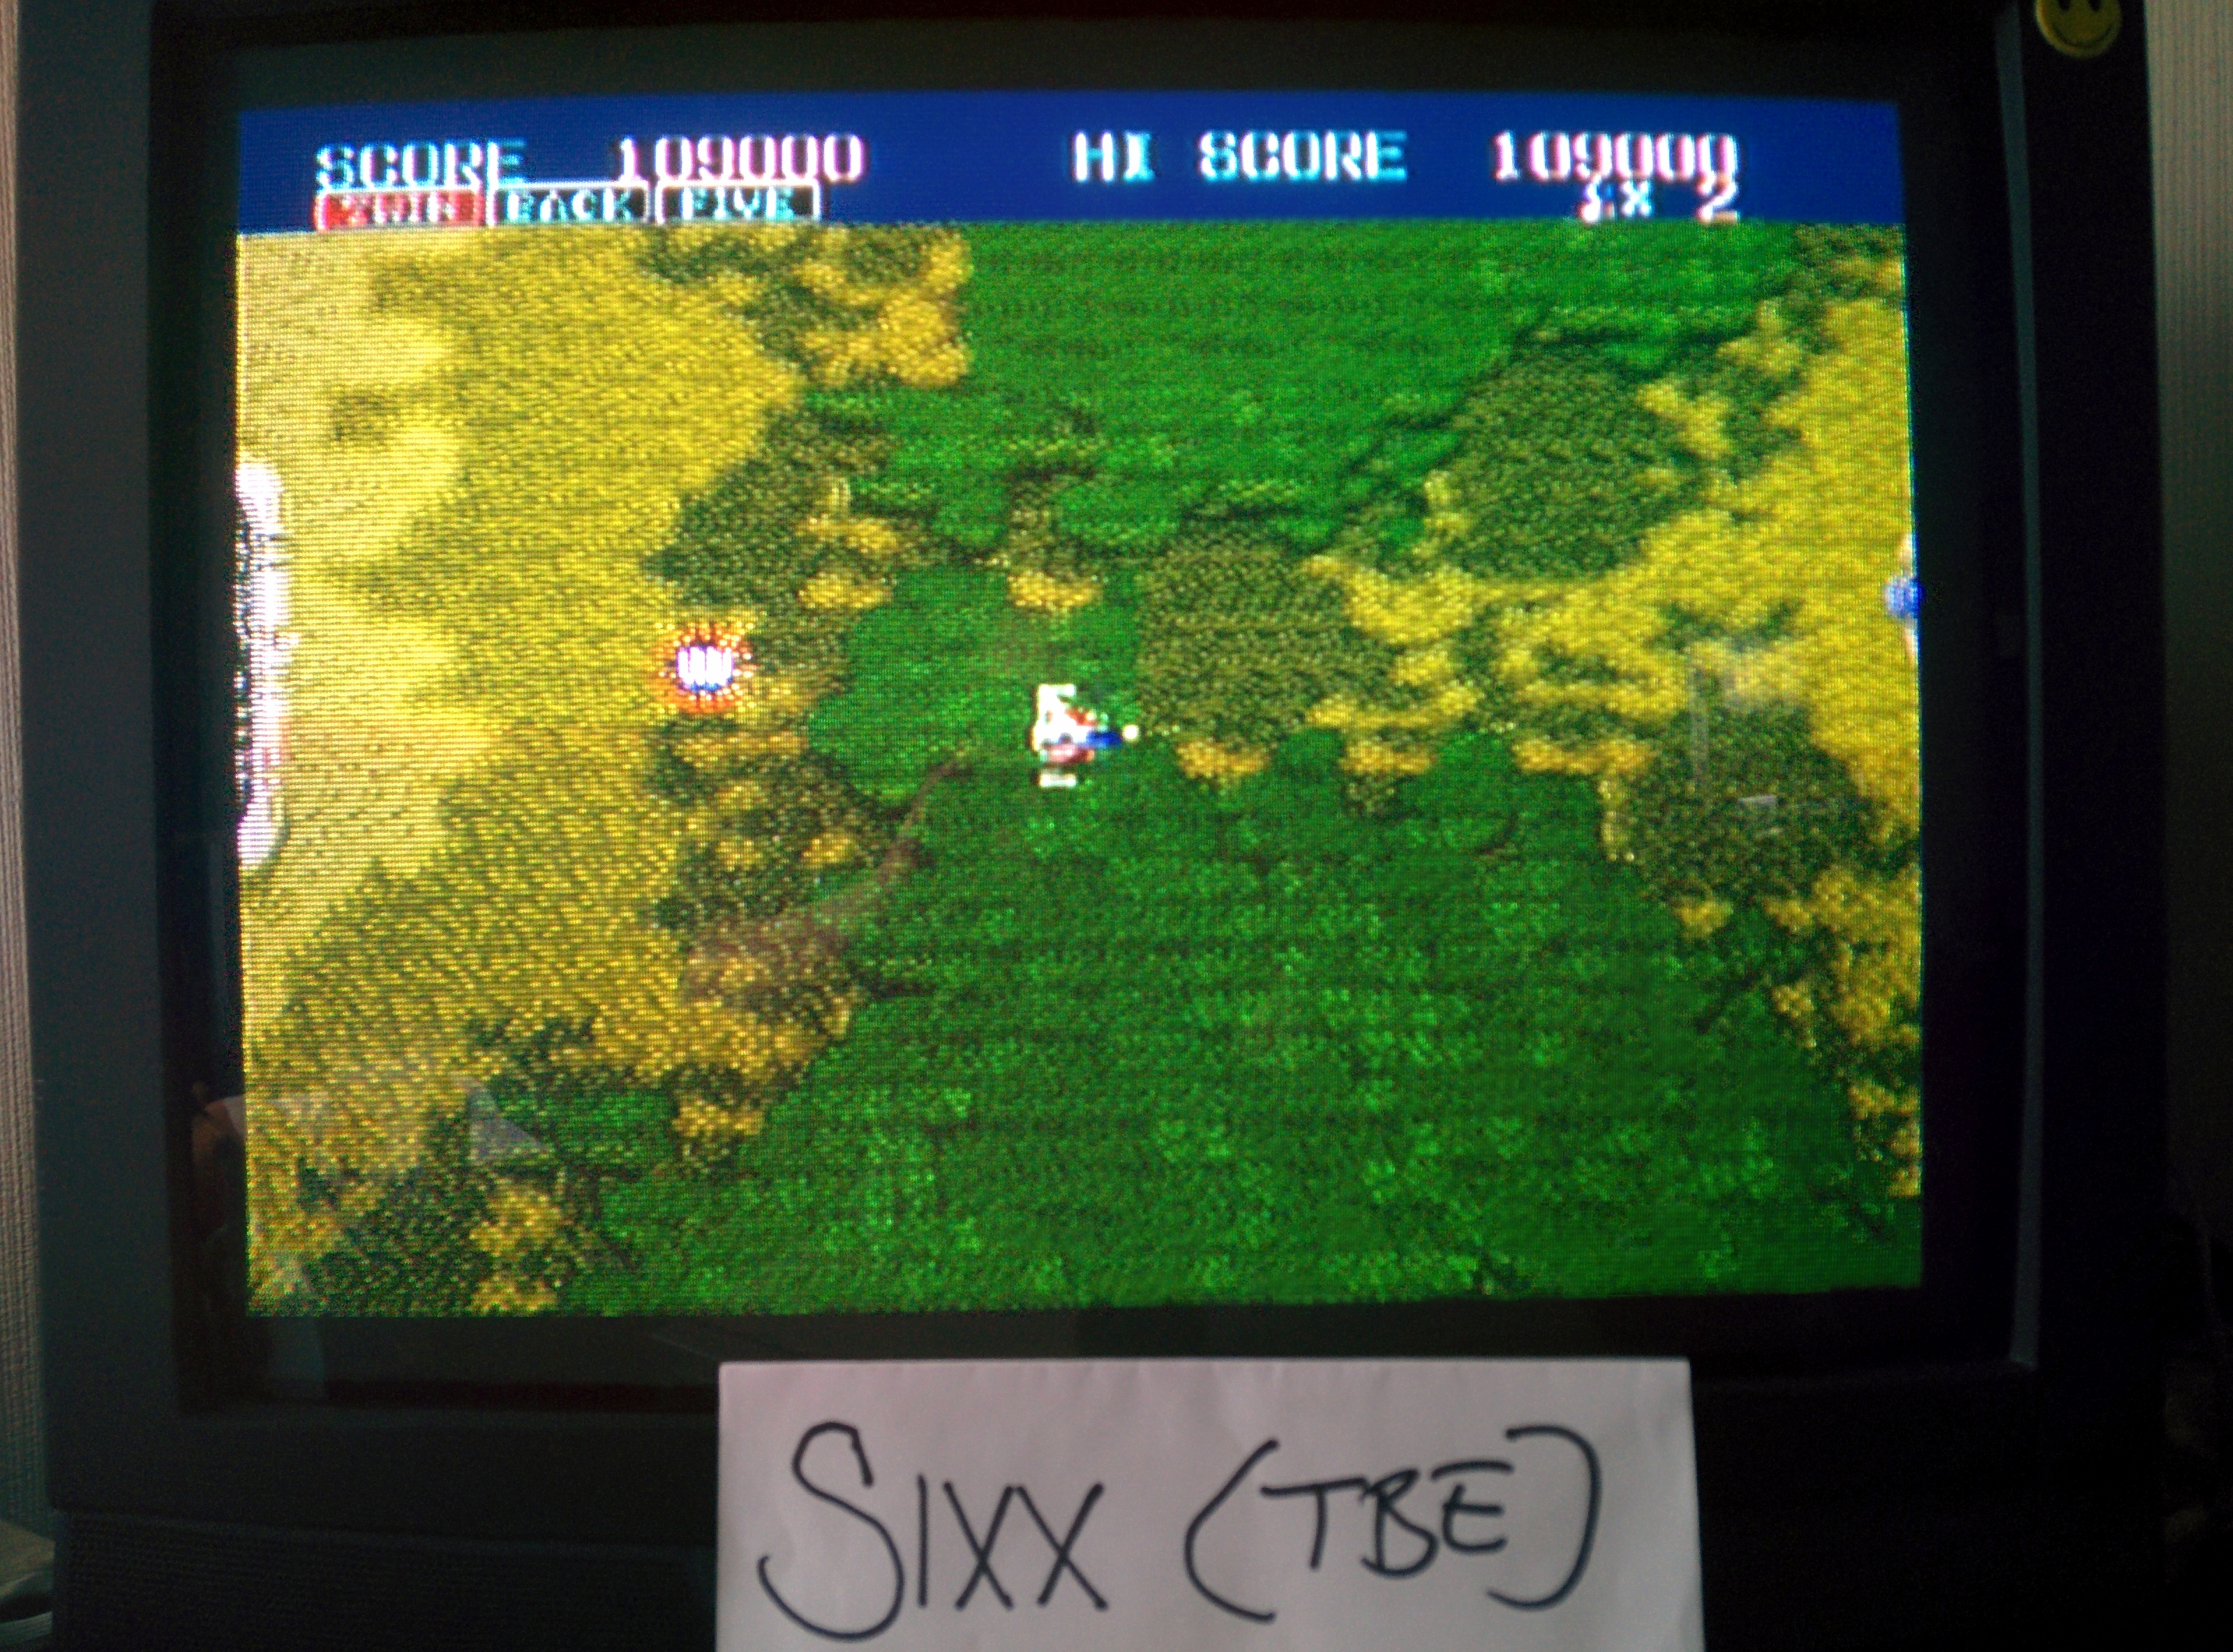 Sixx: Thunder Force 2 (Sega Genesis / MegaDrive Emulated) 109,000 points on 2014-05-07 02:03:39